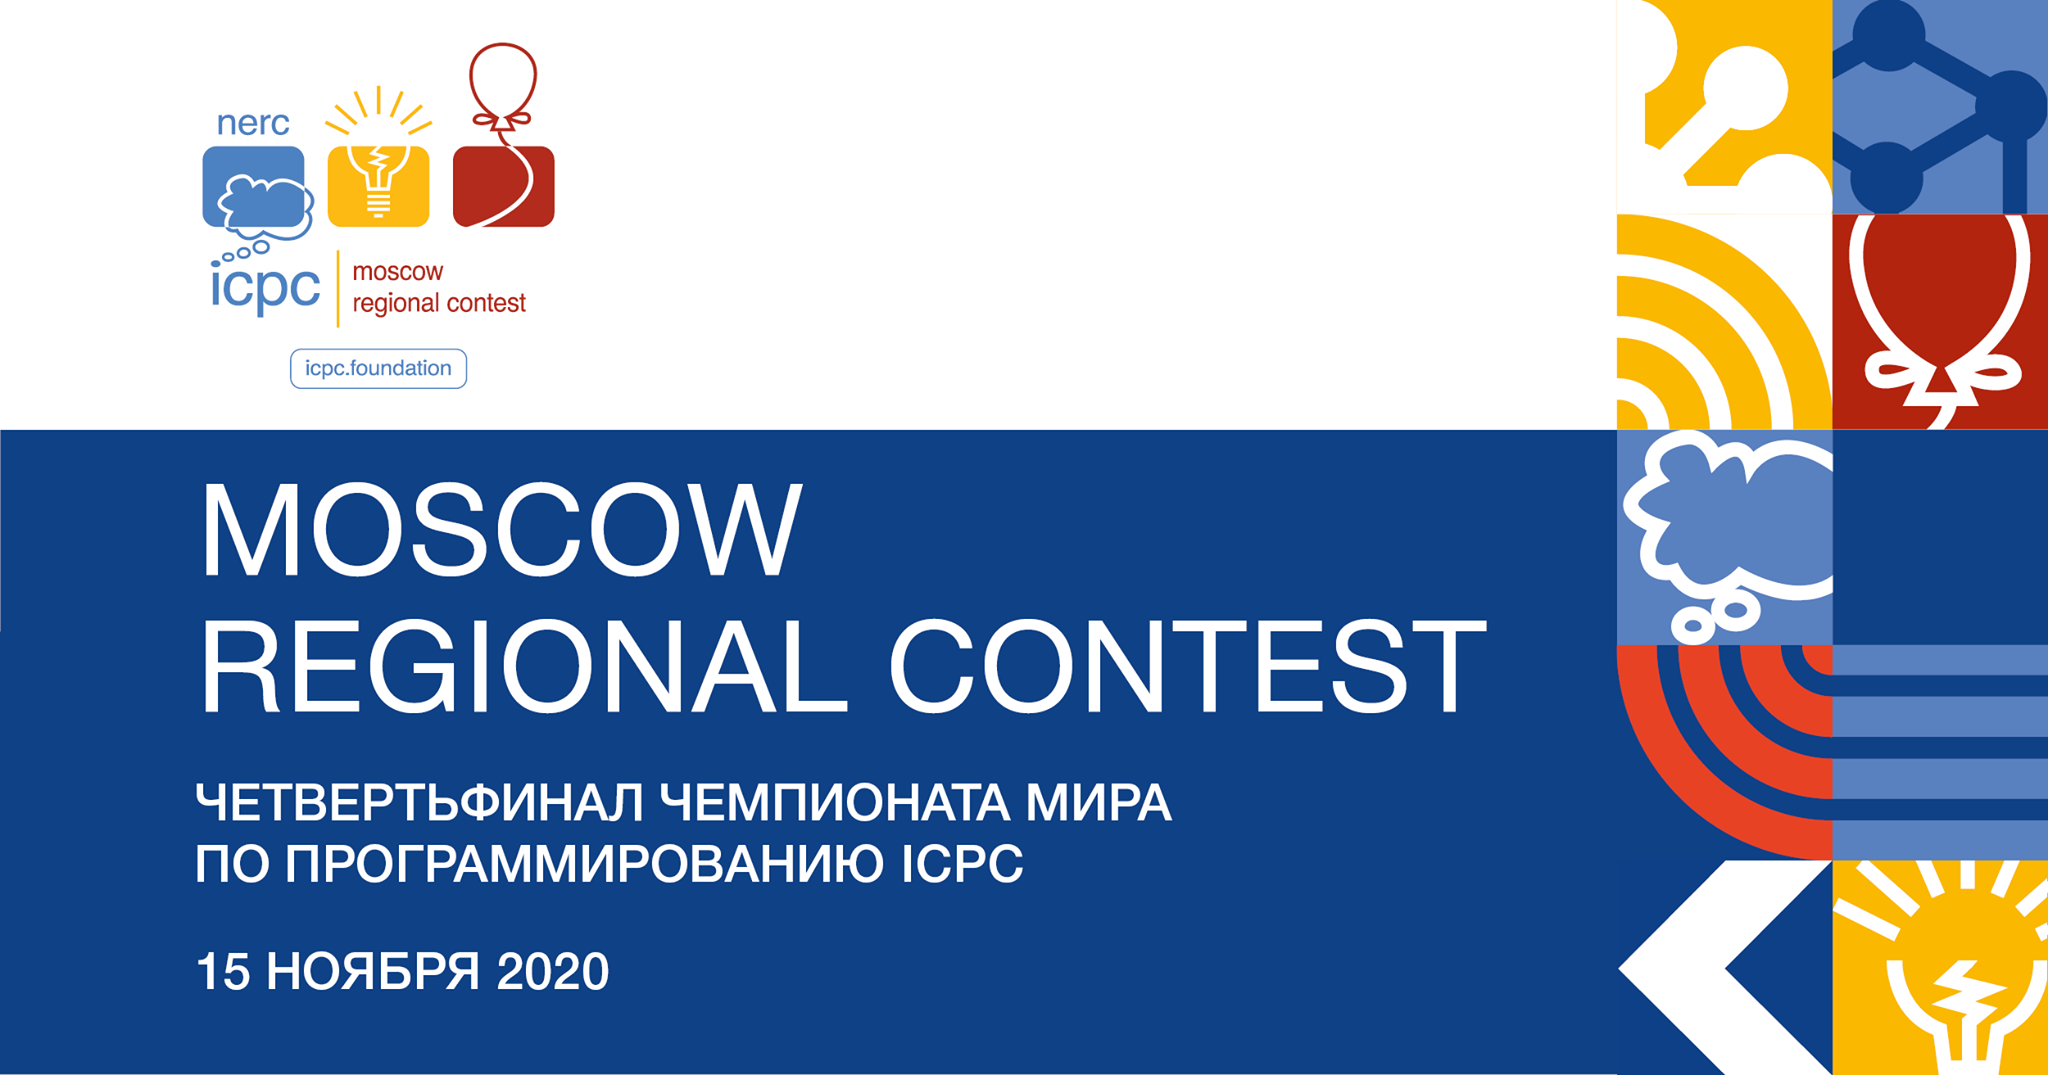 Moscow Regional Contest